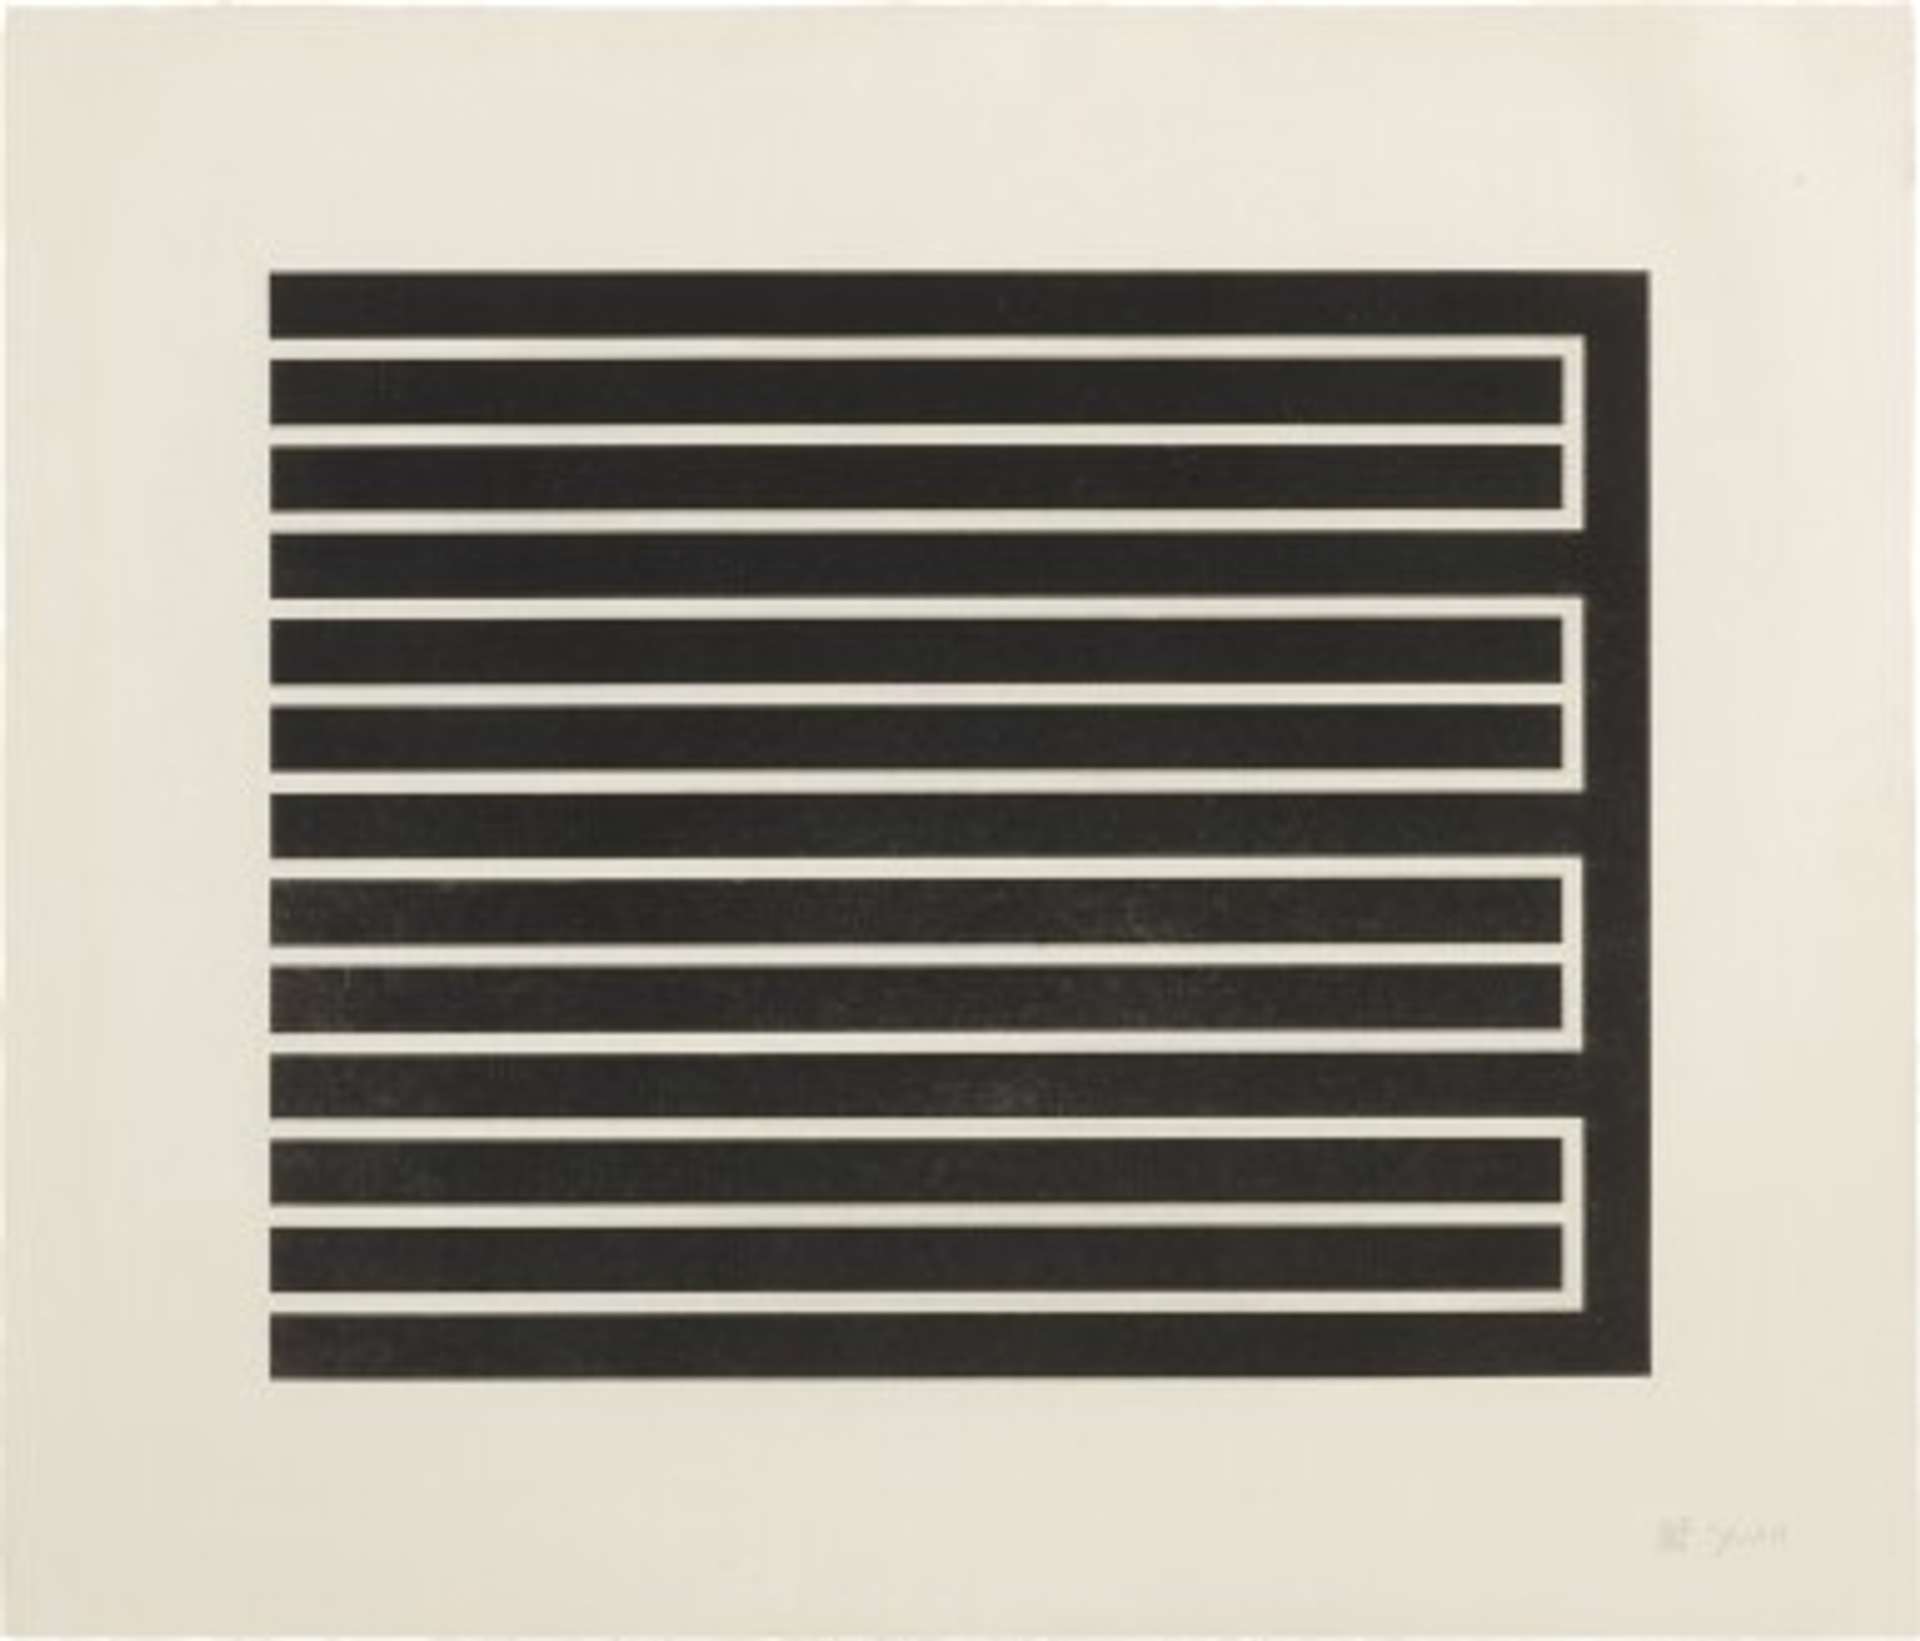 Untitled (S. 123) - Signed Print by Donald Judd 1980 - MyArtBroker